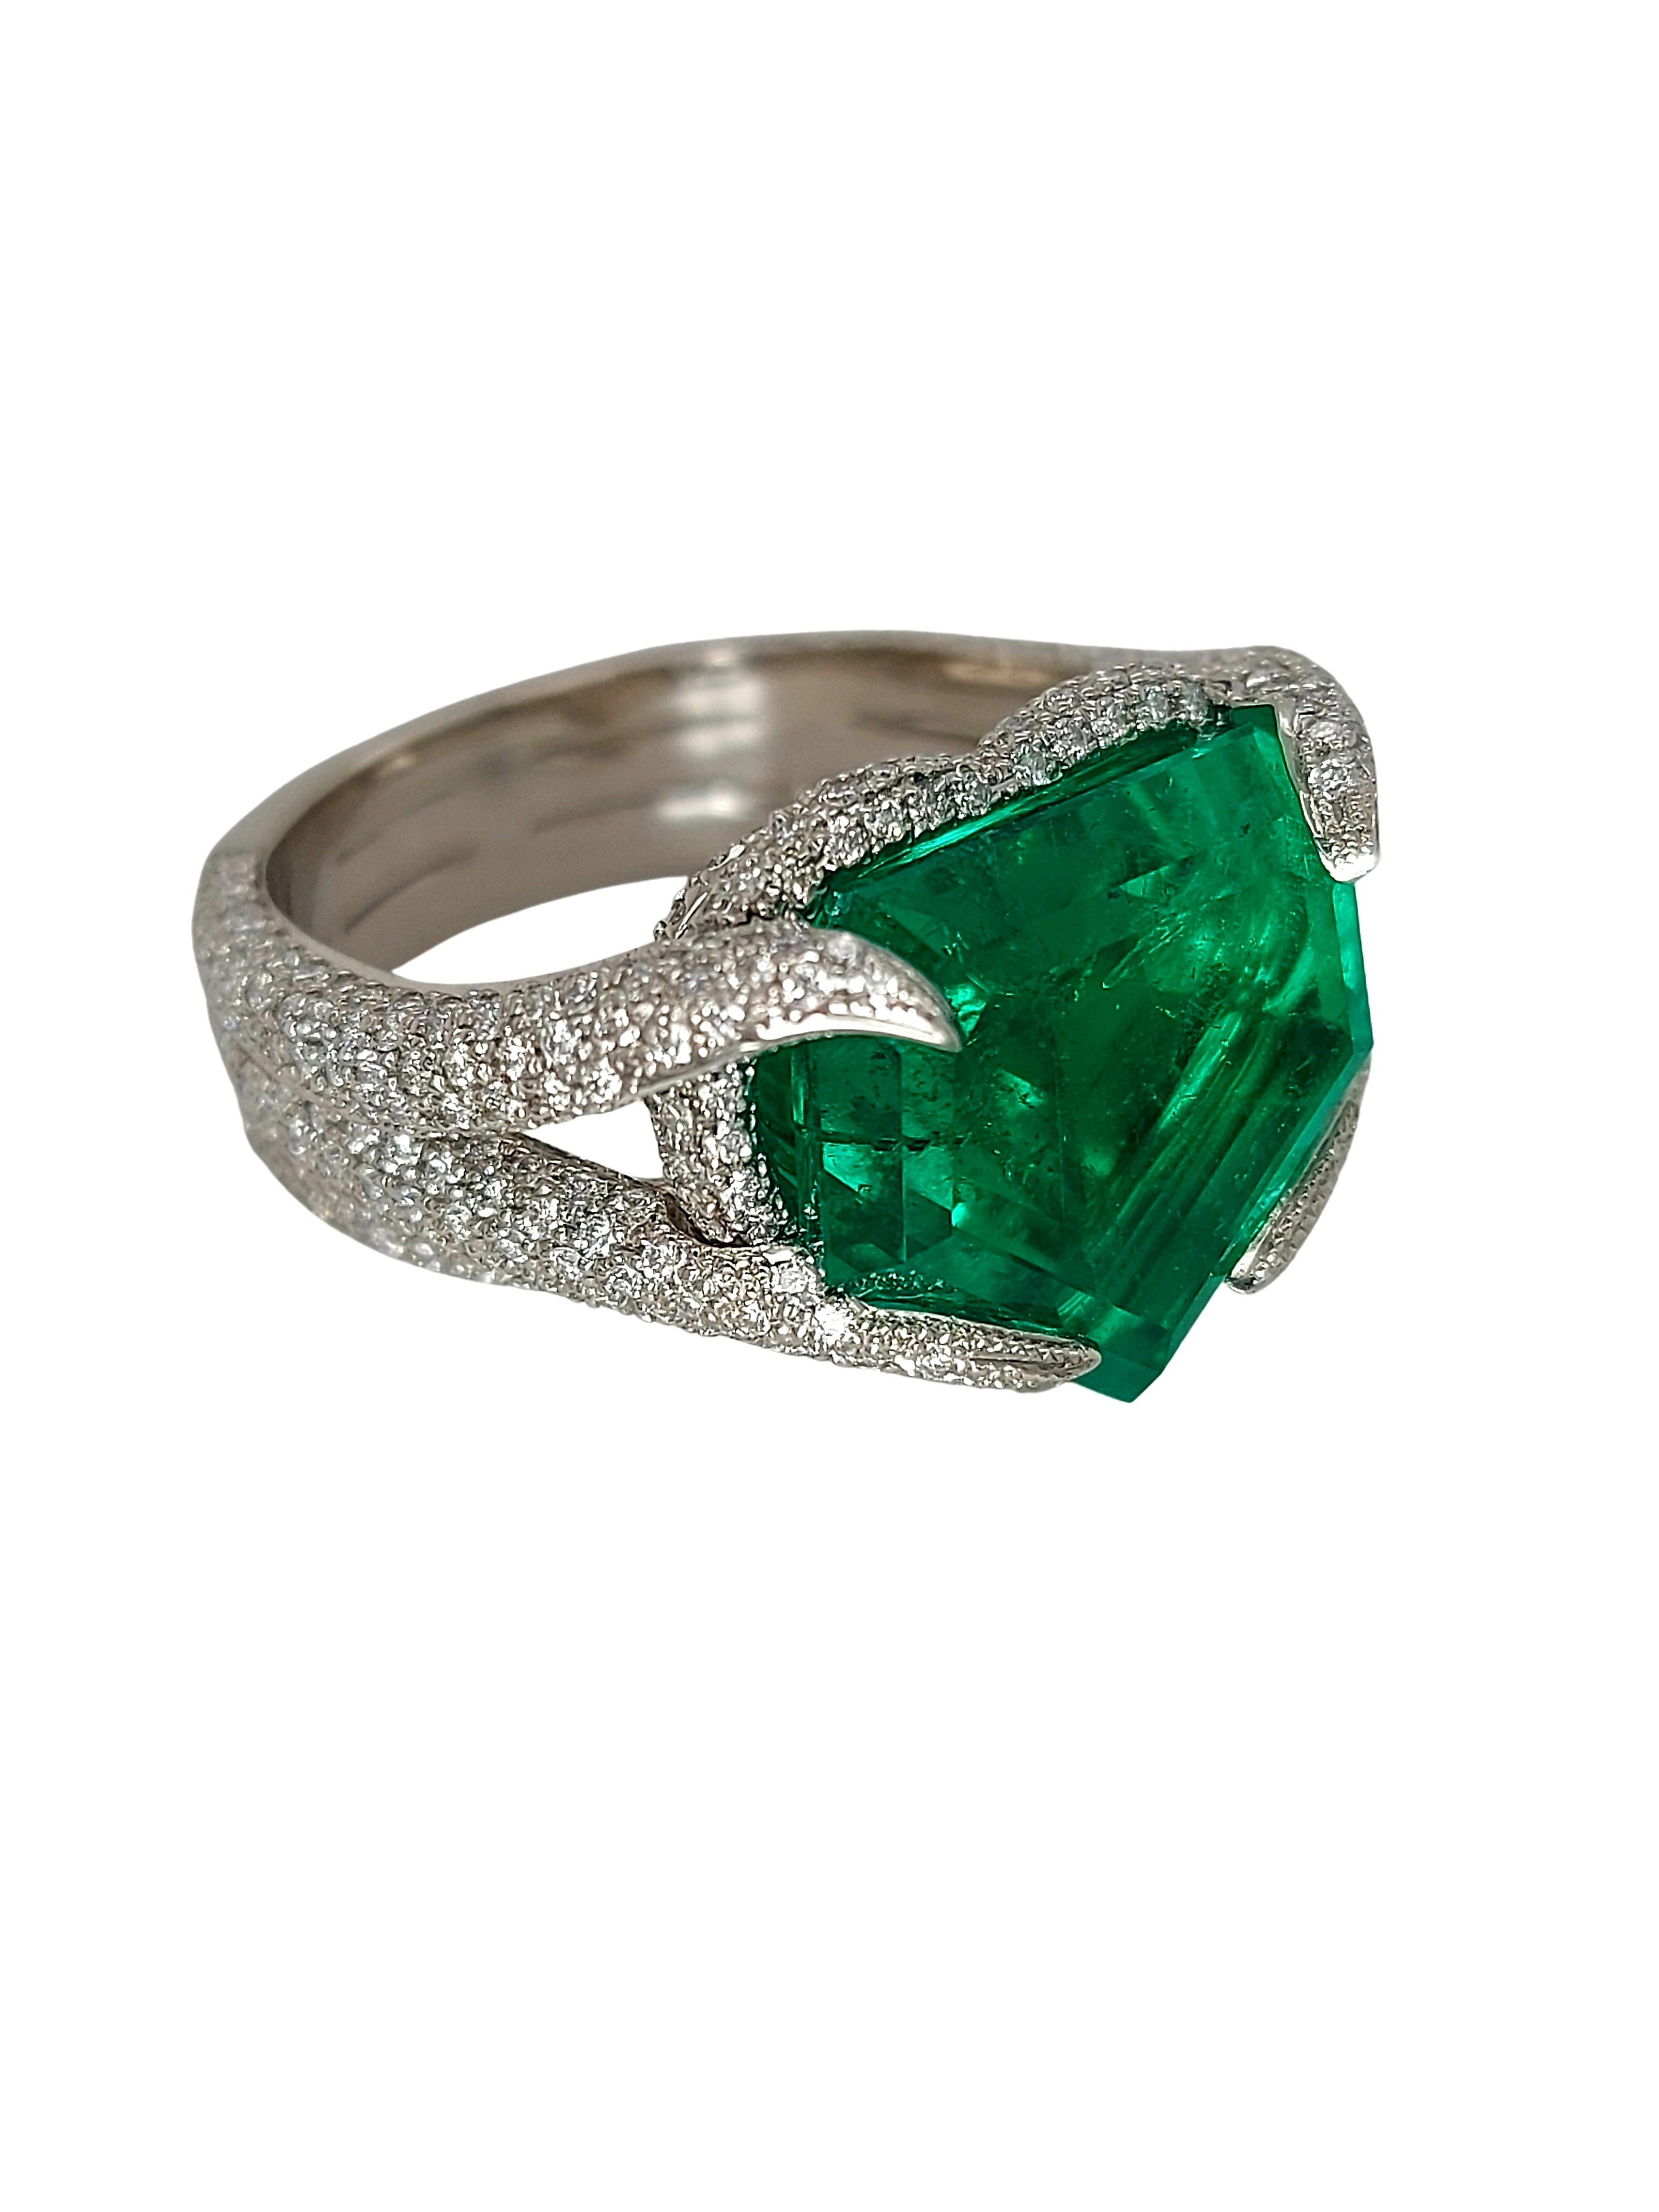 SSEF Certified Platinum 9 Ct Colombian Emerald Minor & Diamonds Unique Ring For Sale 2